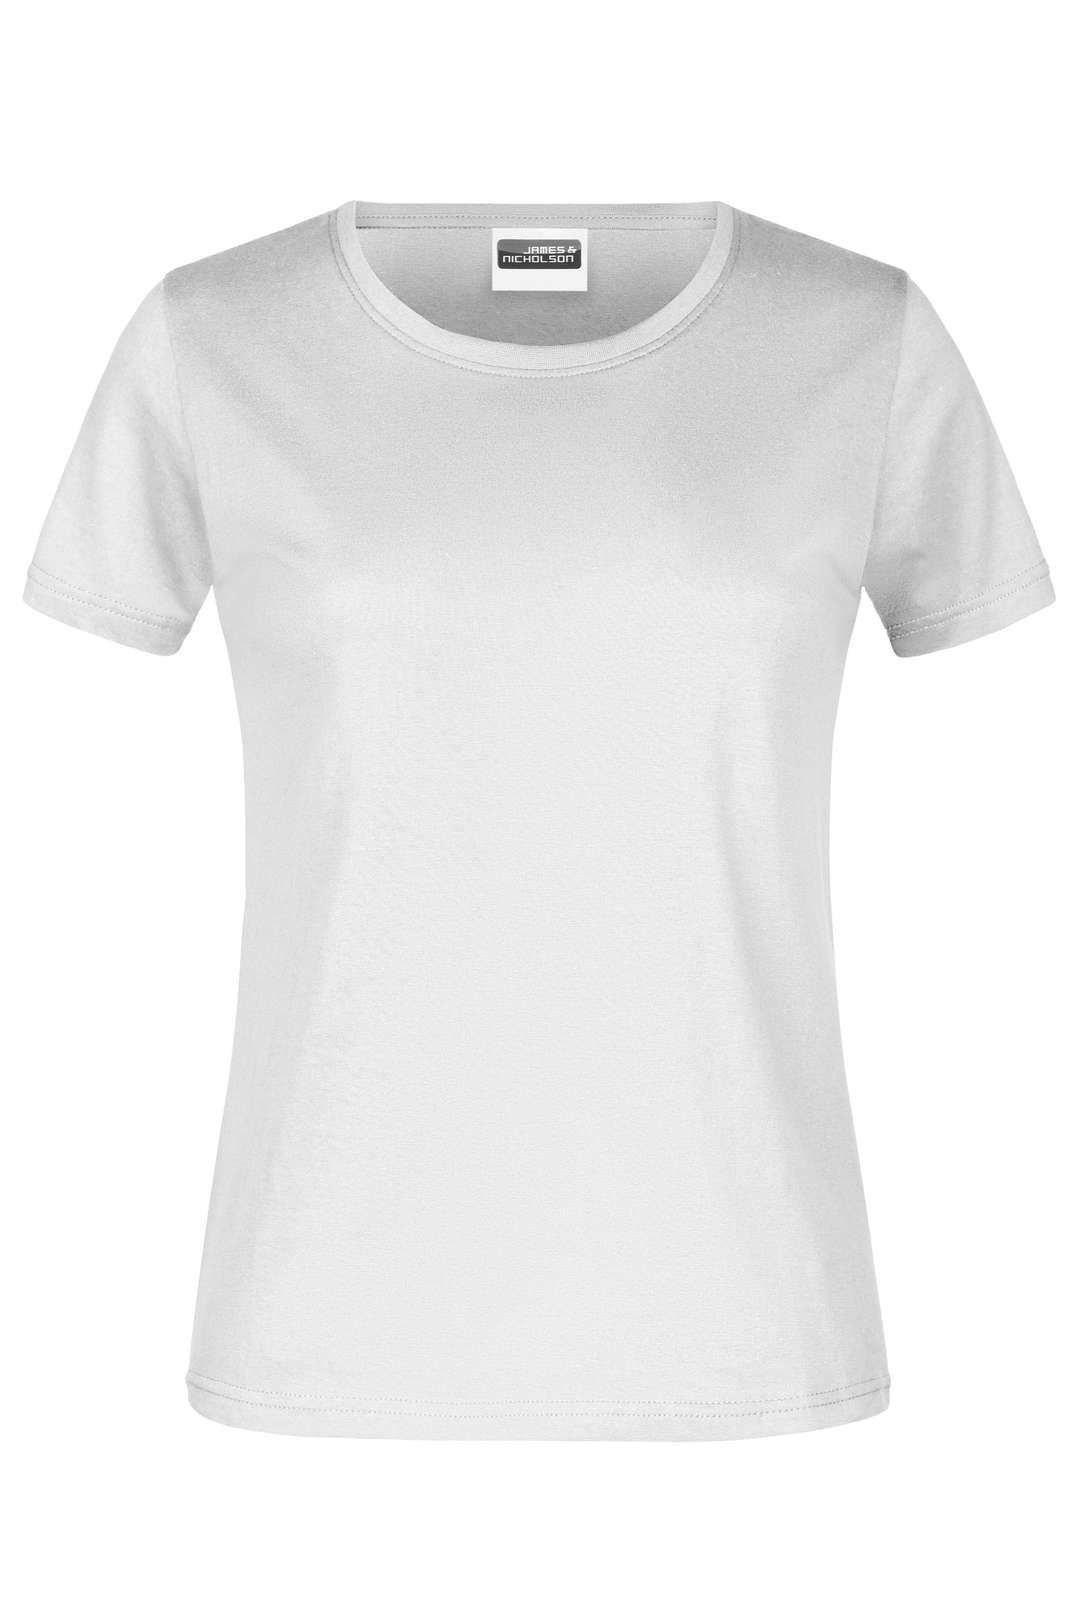 J&N PROMO-T LADY 150 - T-Shirt - JA Profil 